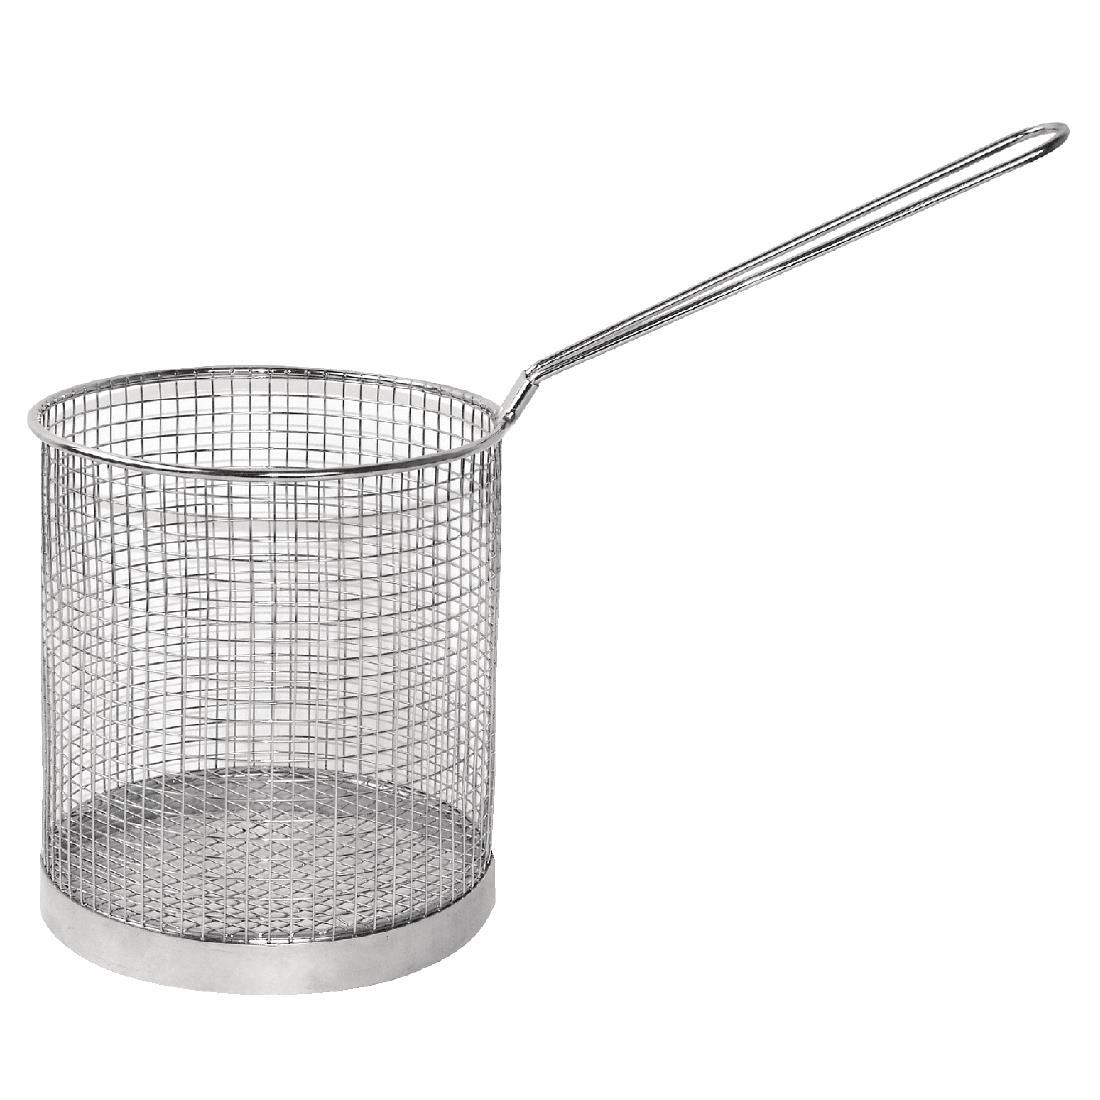 Vogue Stainless Steel Spaghetti Basket 5.9" - J719  - 1